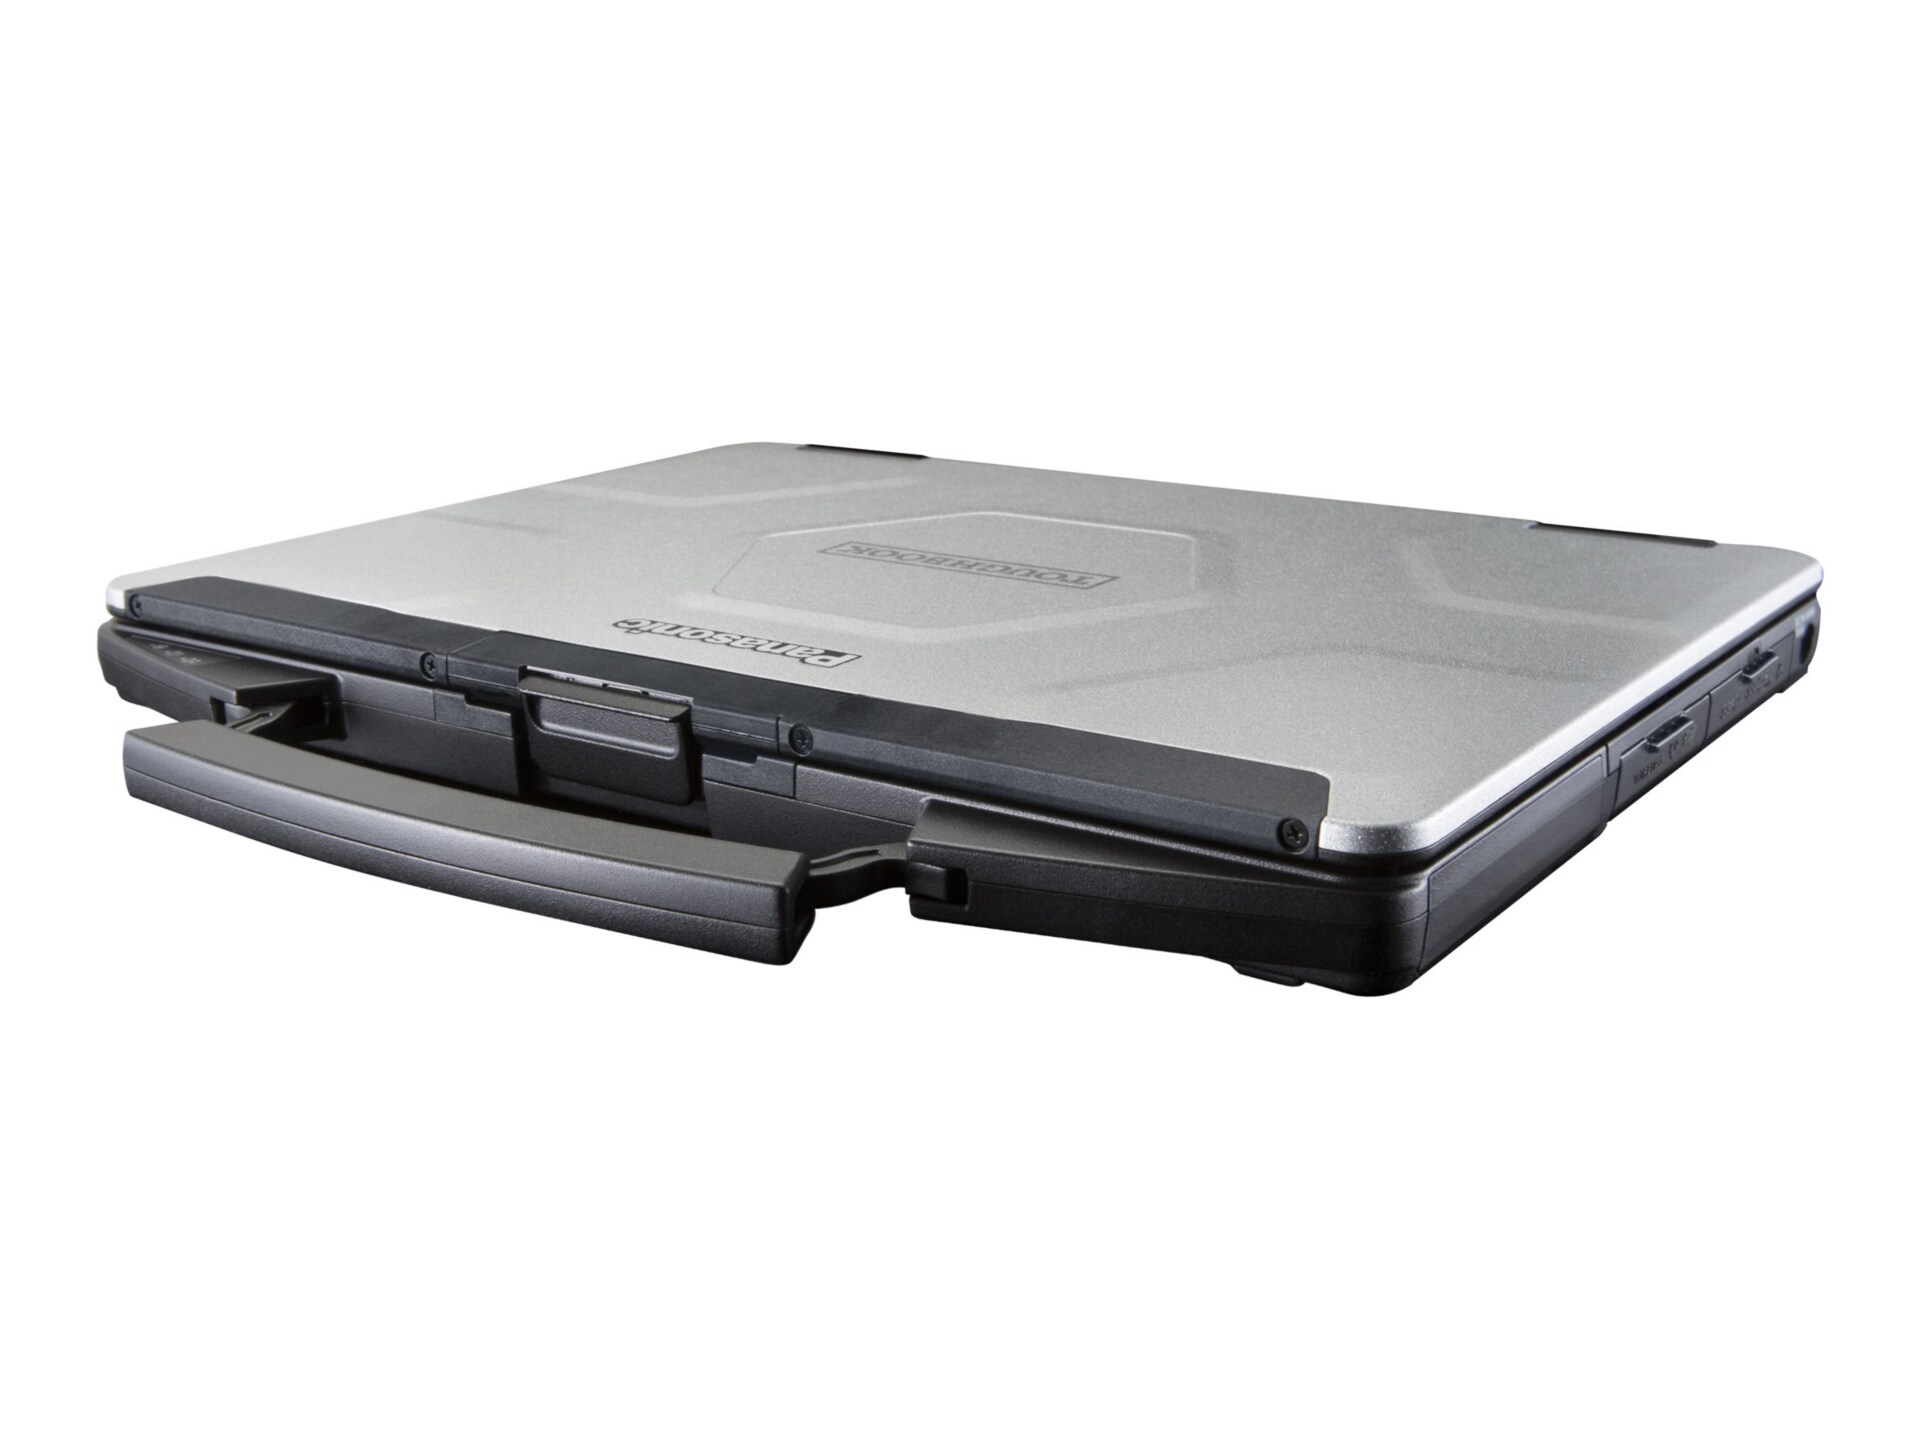 Panasonic Toughbook 54 Gloved Multi Touch - 14" - Core i5 6300U - 4 GB RAM - 256 GB SSD